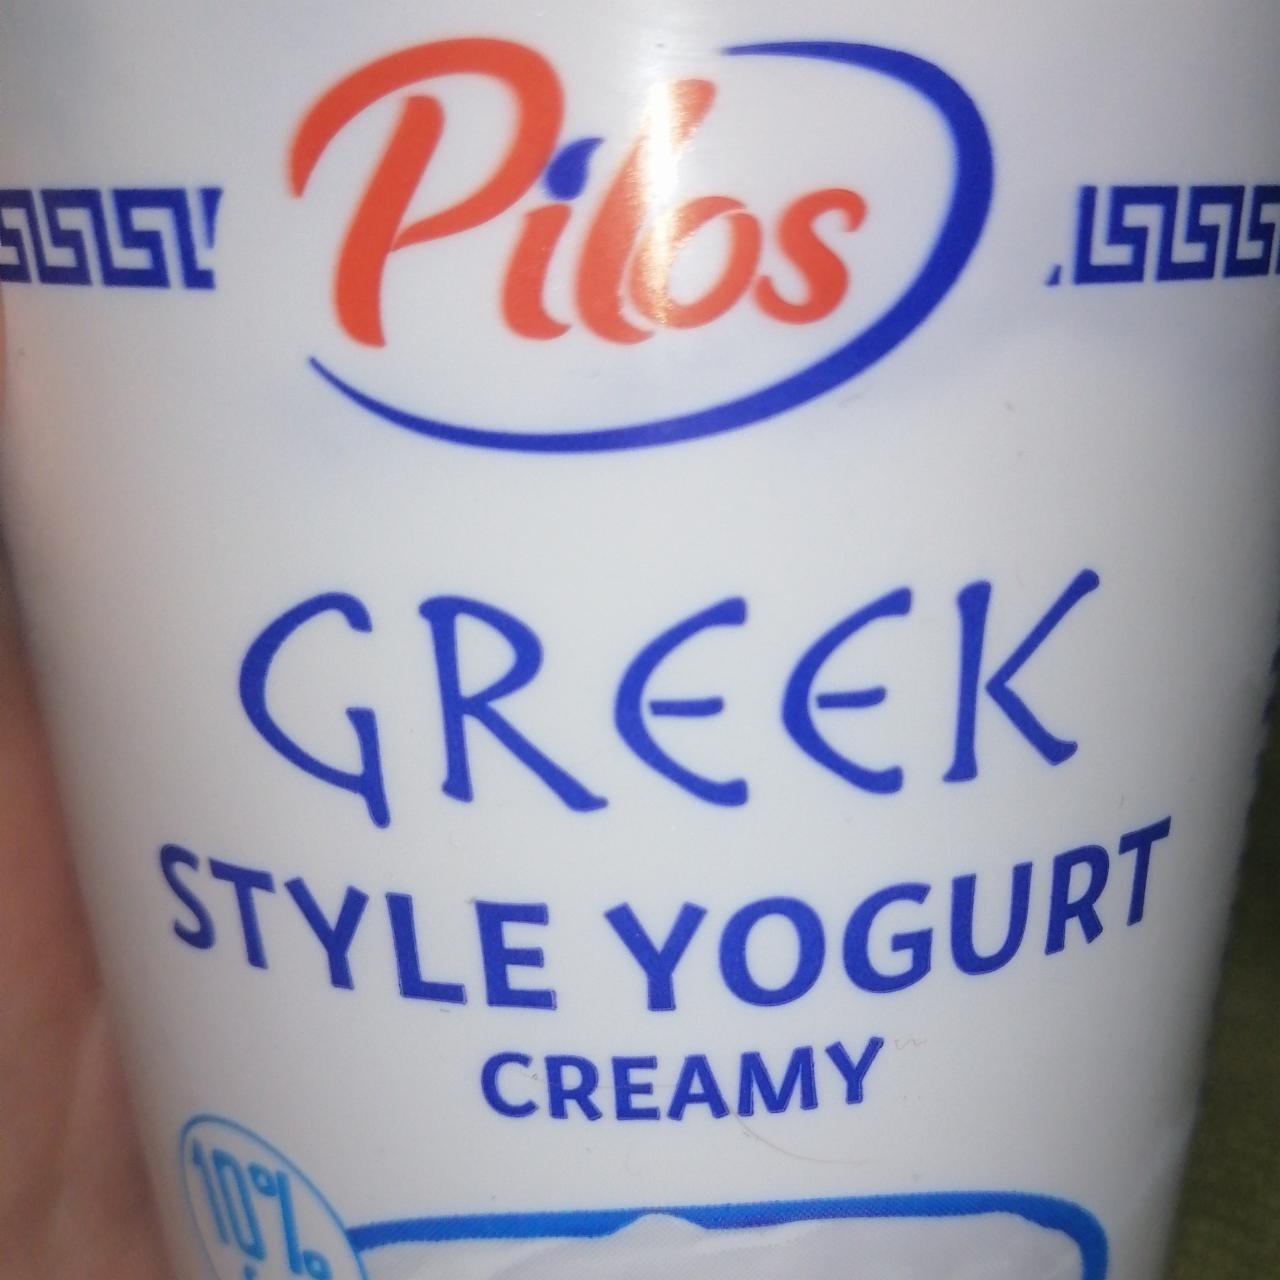 Képek - Görög joghurt Creamy 10% Pilos